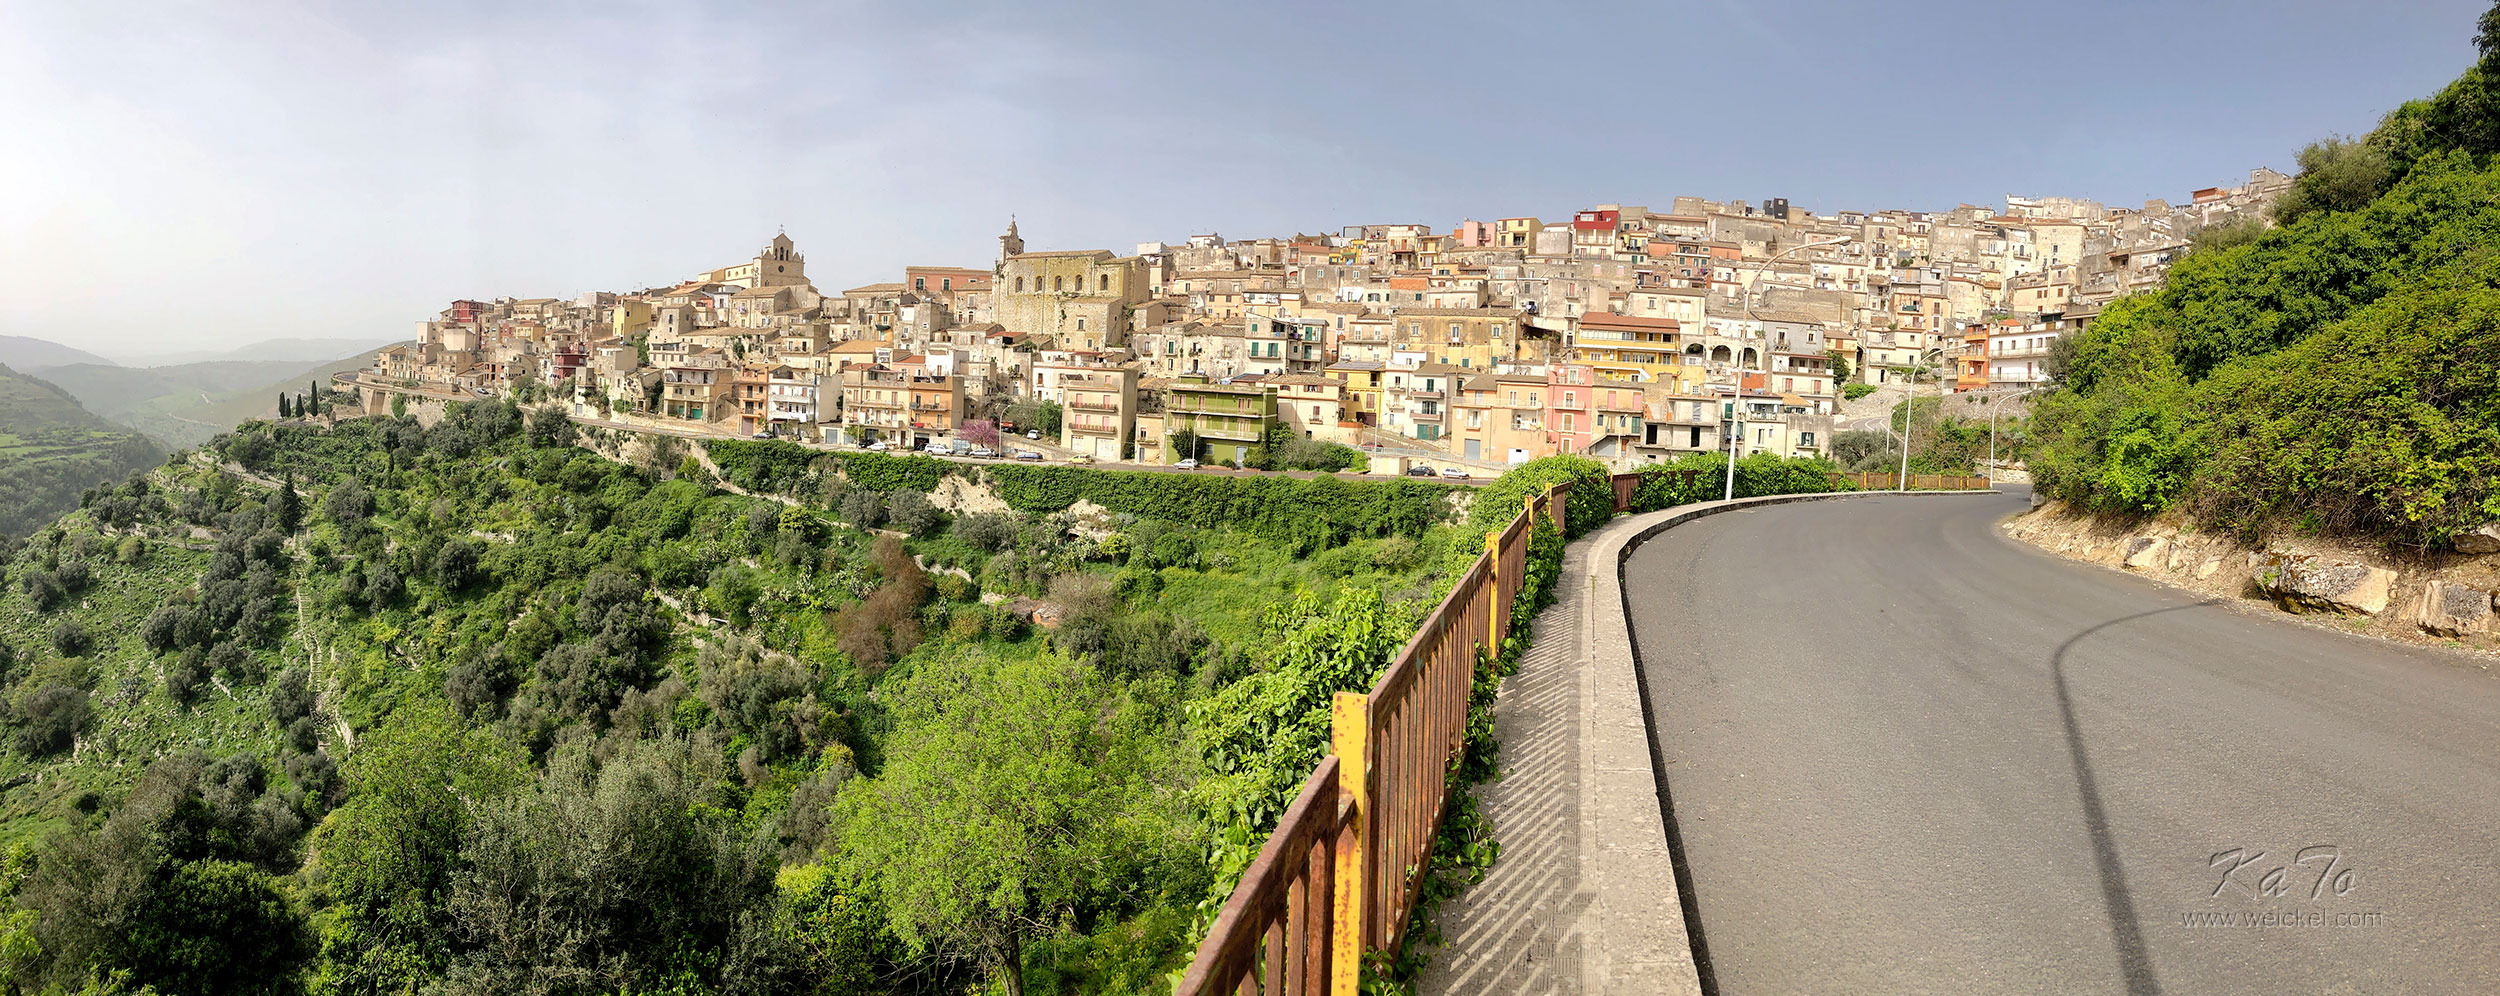 View to Monterosso Almo